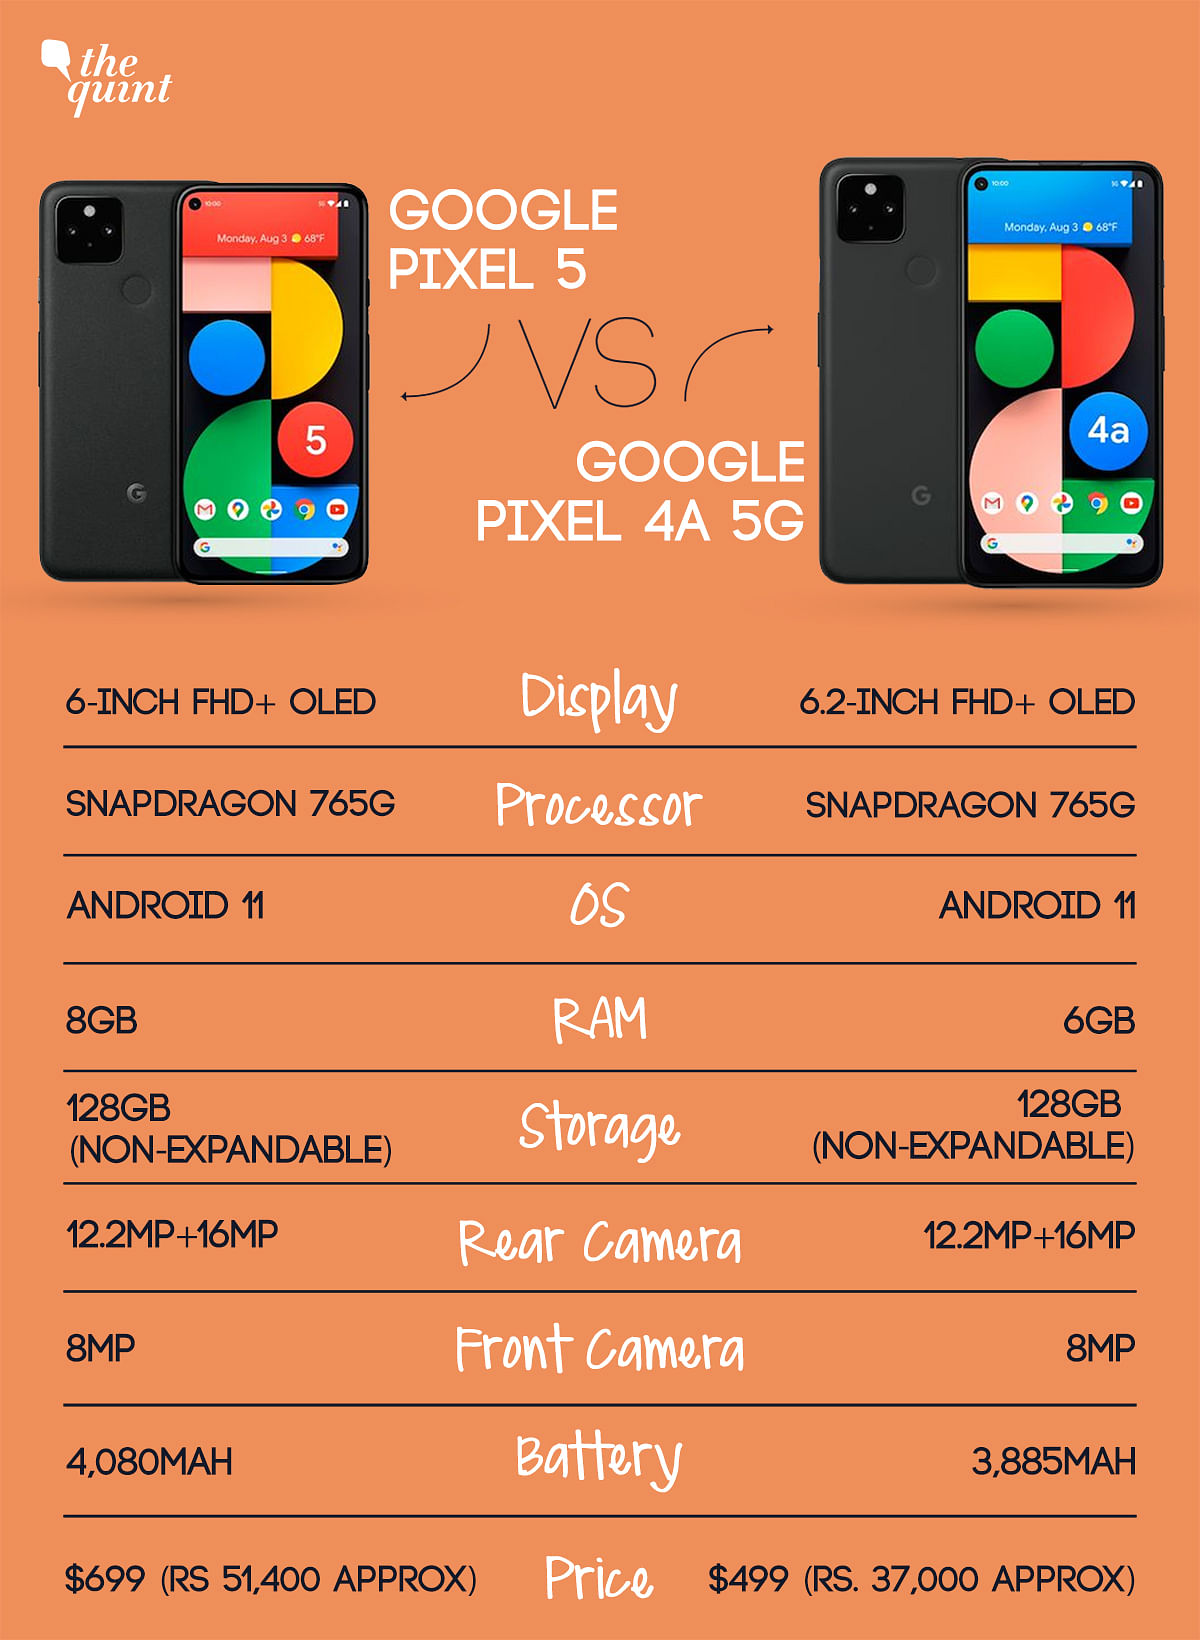 Google Pixel 5 Vs Google Pixel 4a 5G: Comparison, Price, Specifications